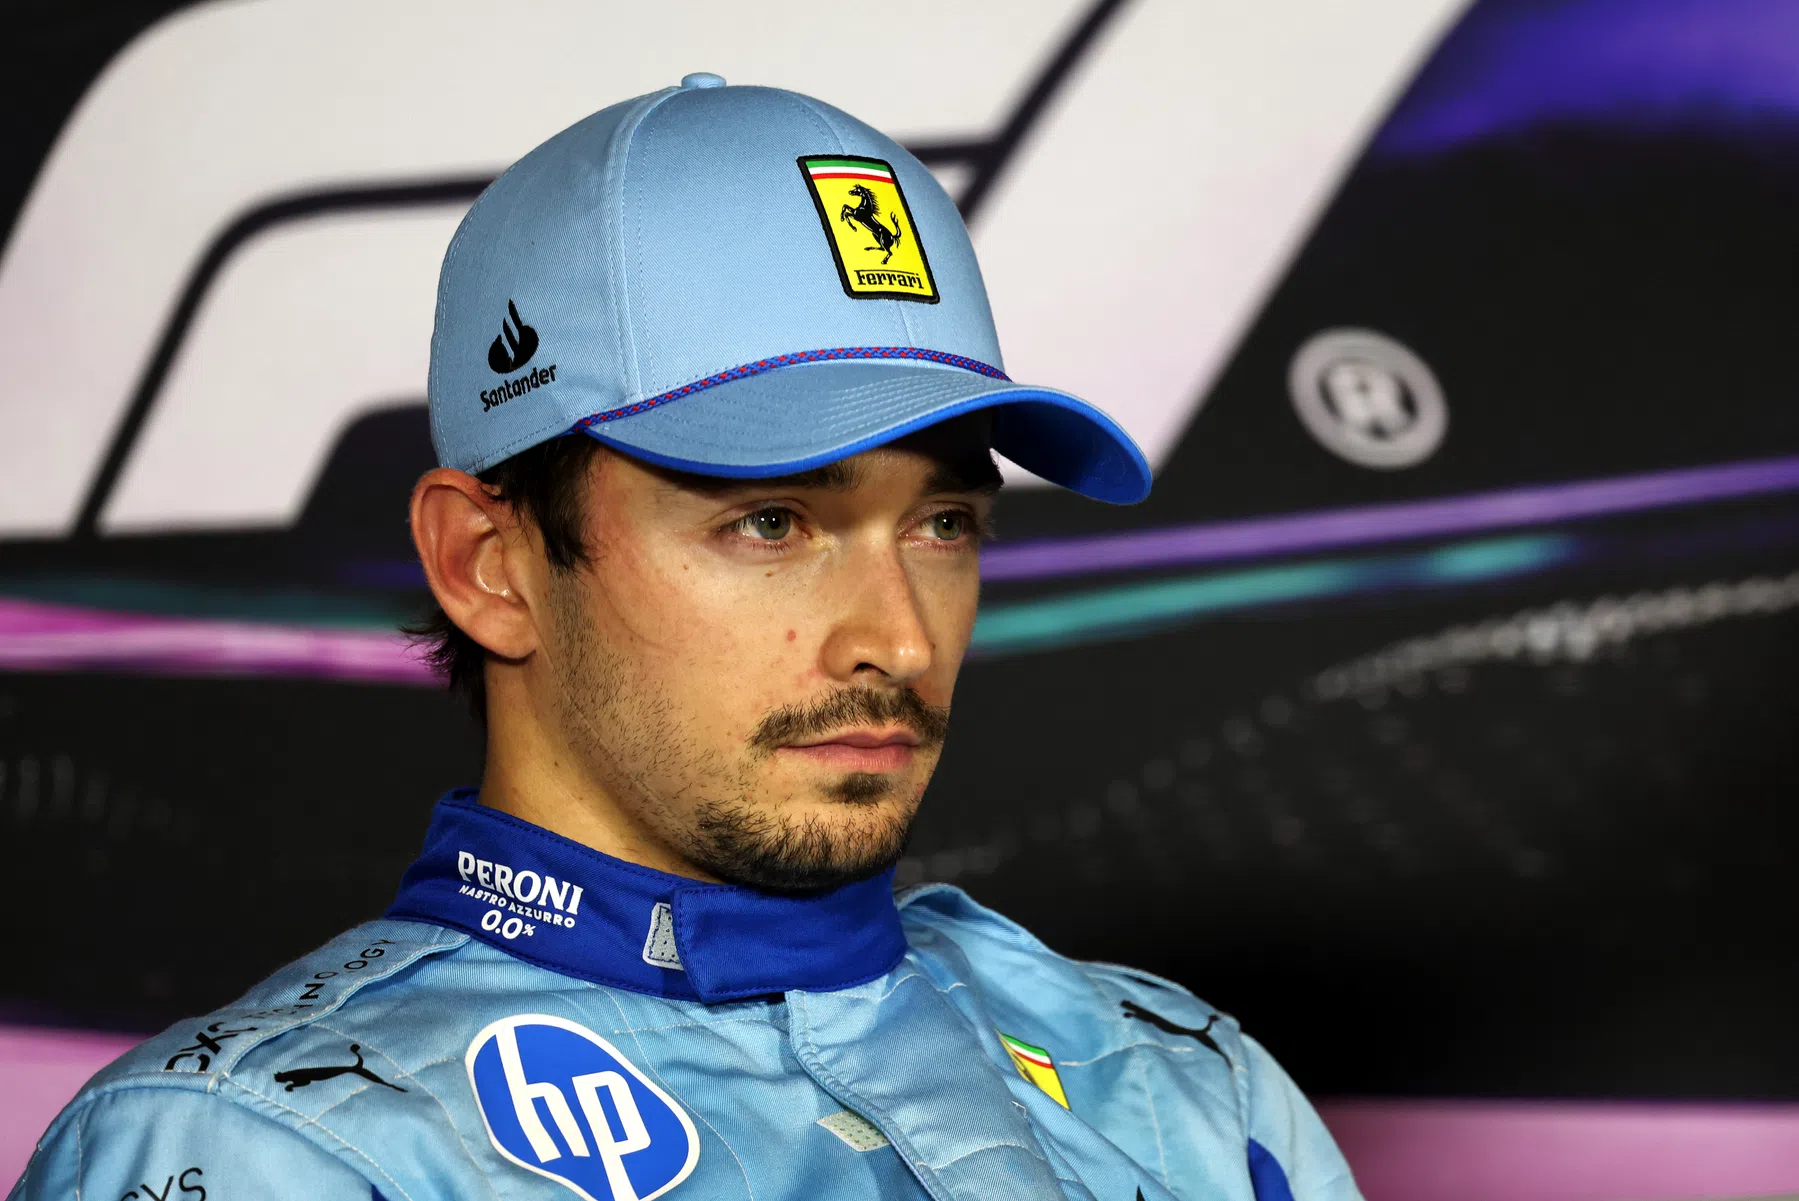 Leclerc planea atacar a Verstappen en la primera curva del Gran Premio de Miami